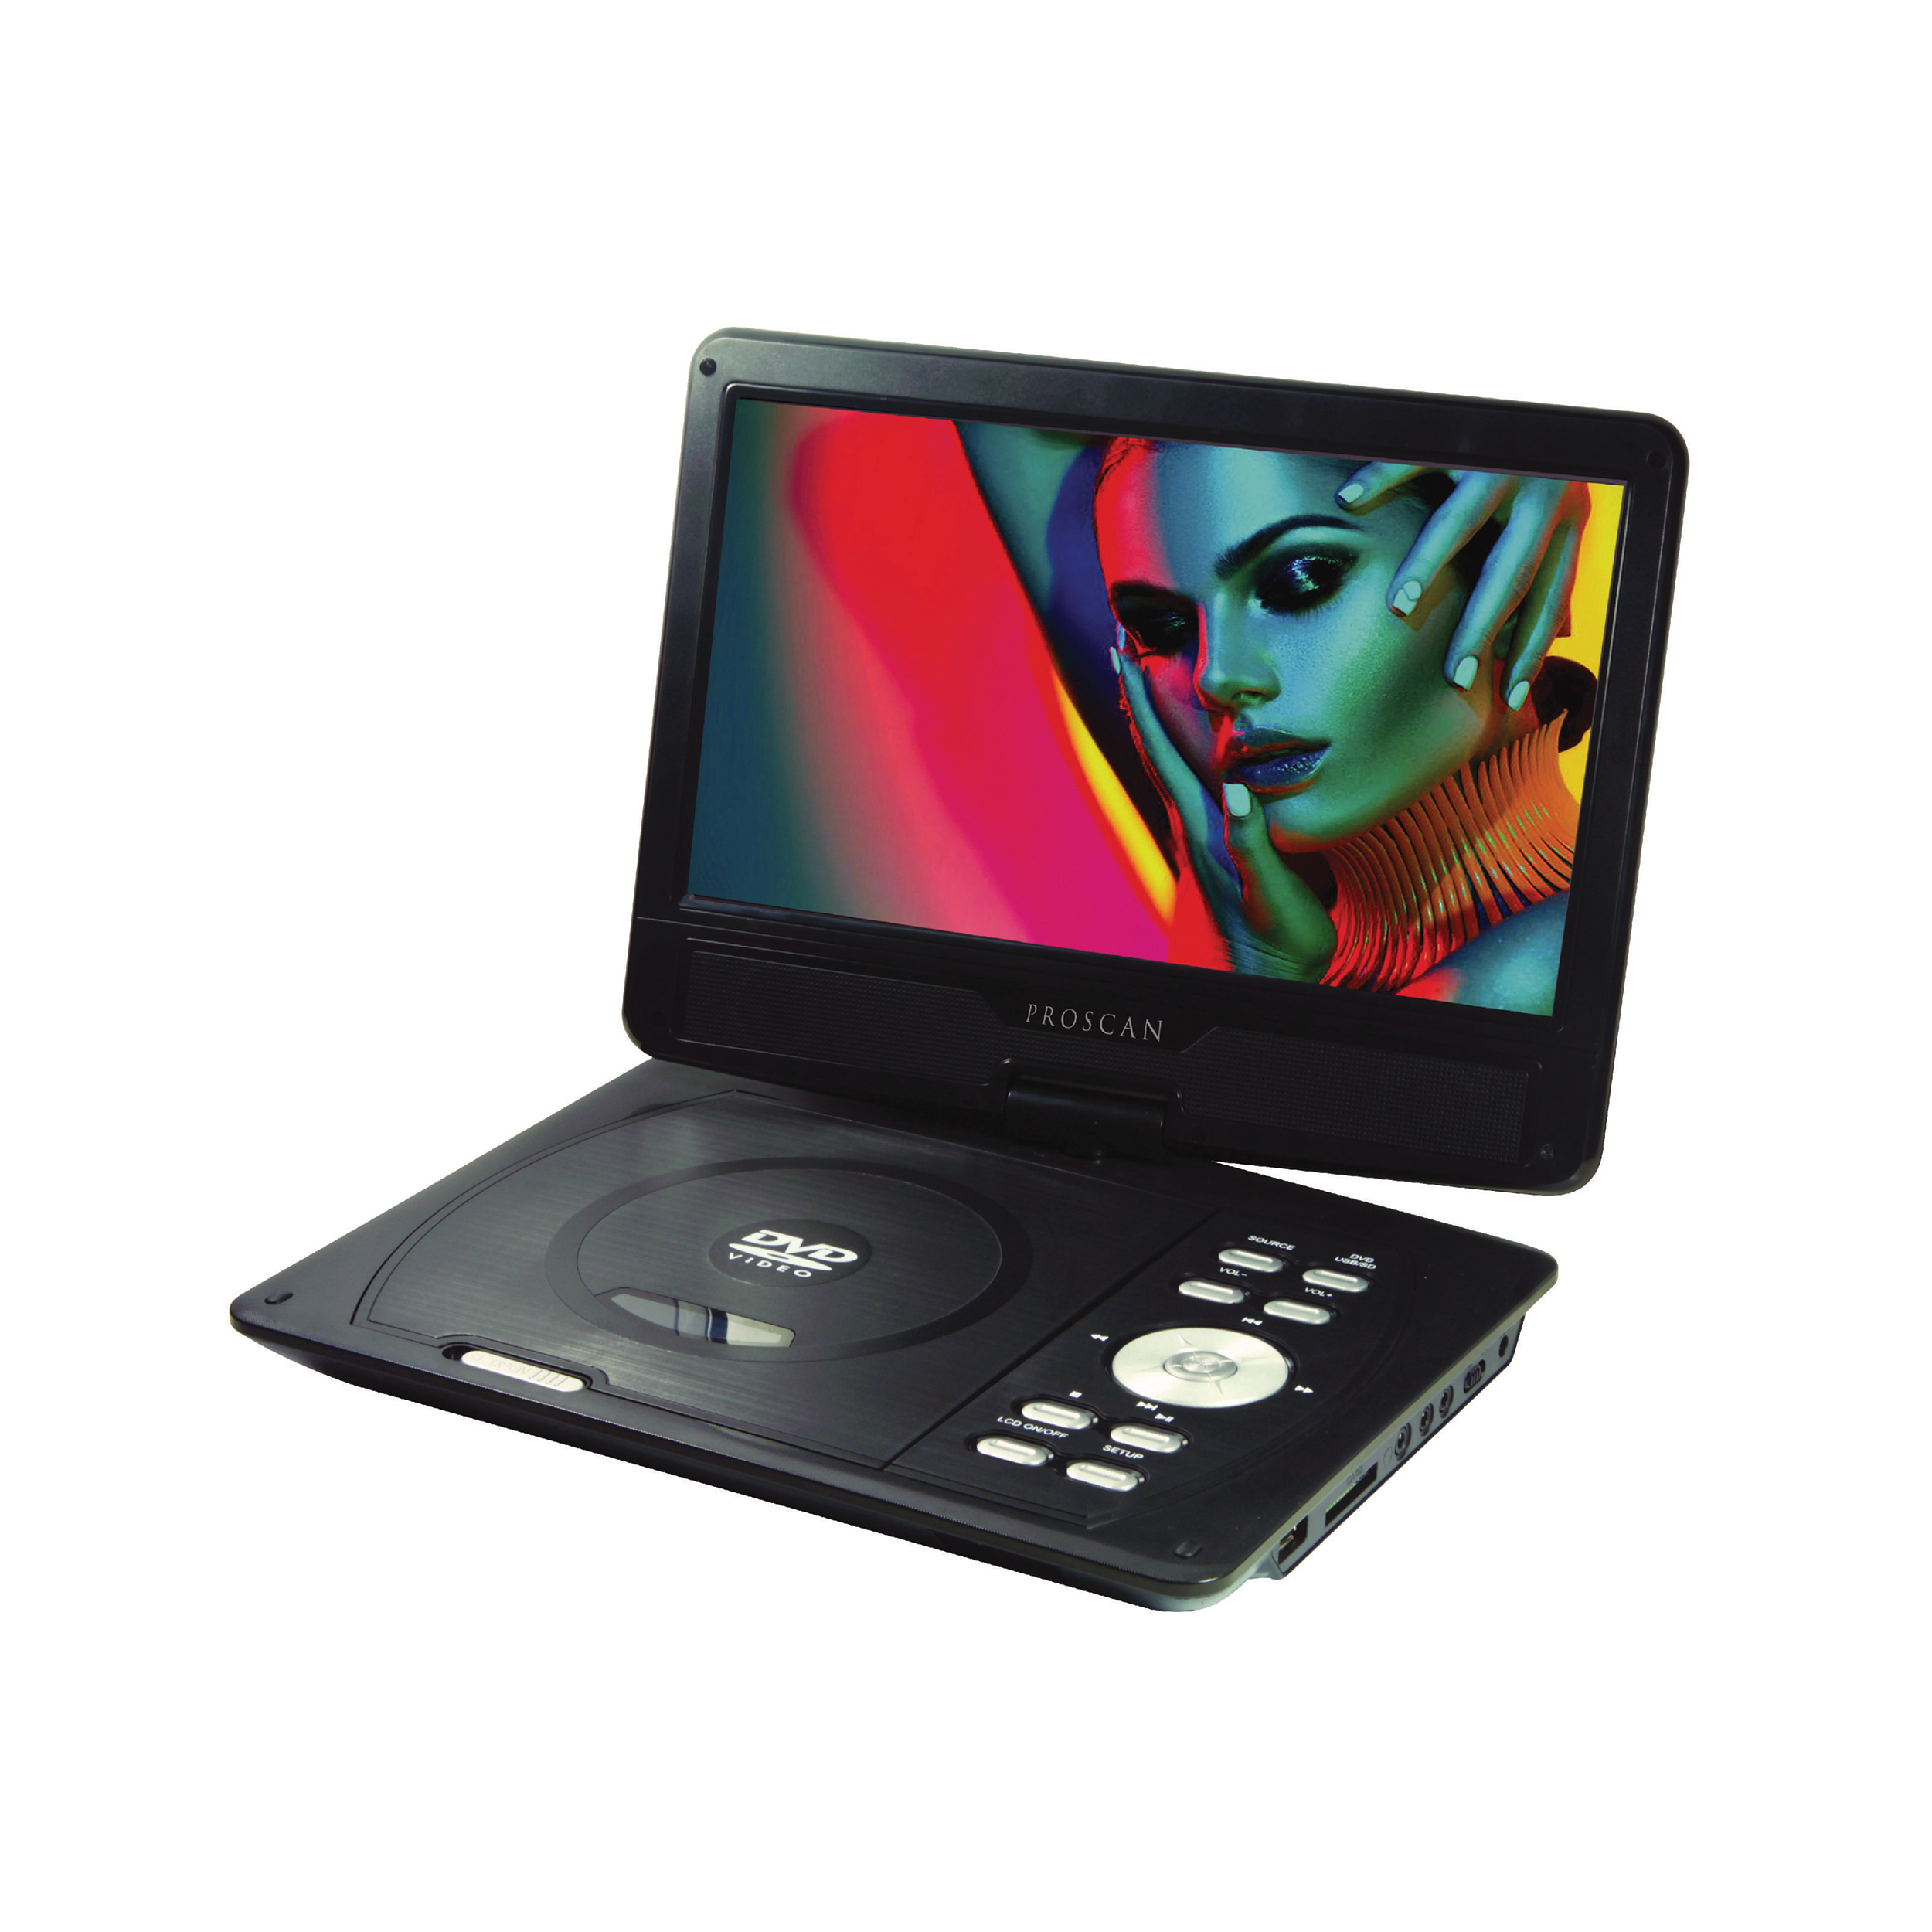 Sylvania 10 ″ Portable DVD Player - Batterie 5HR